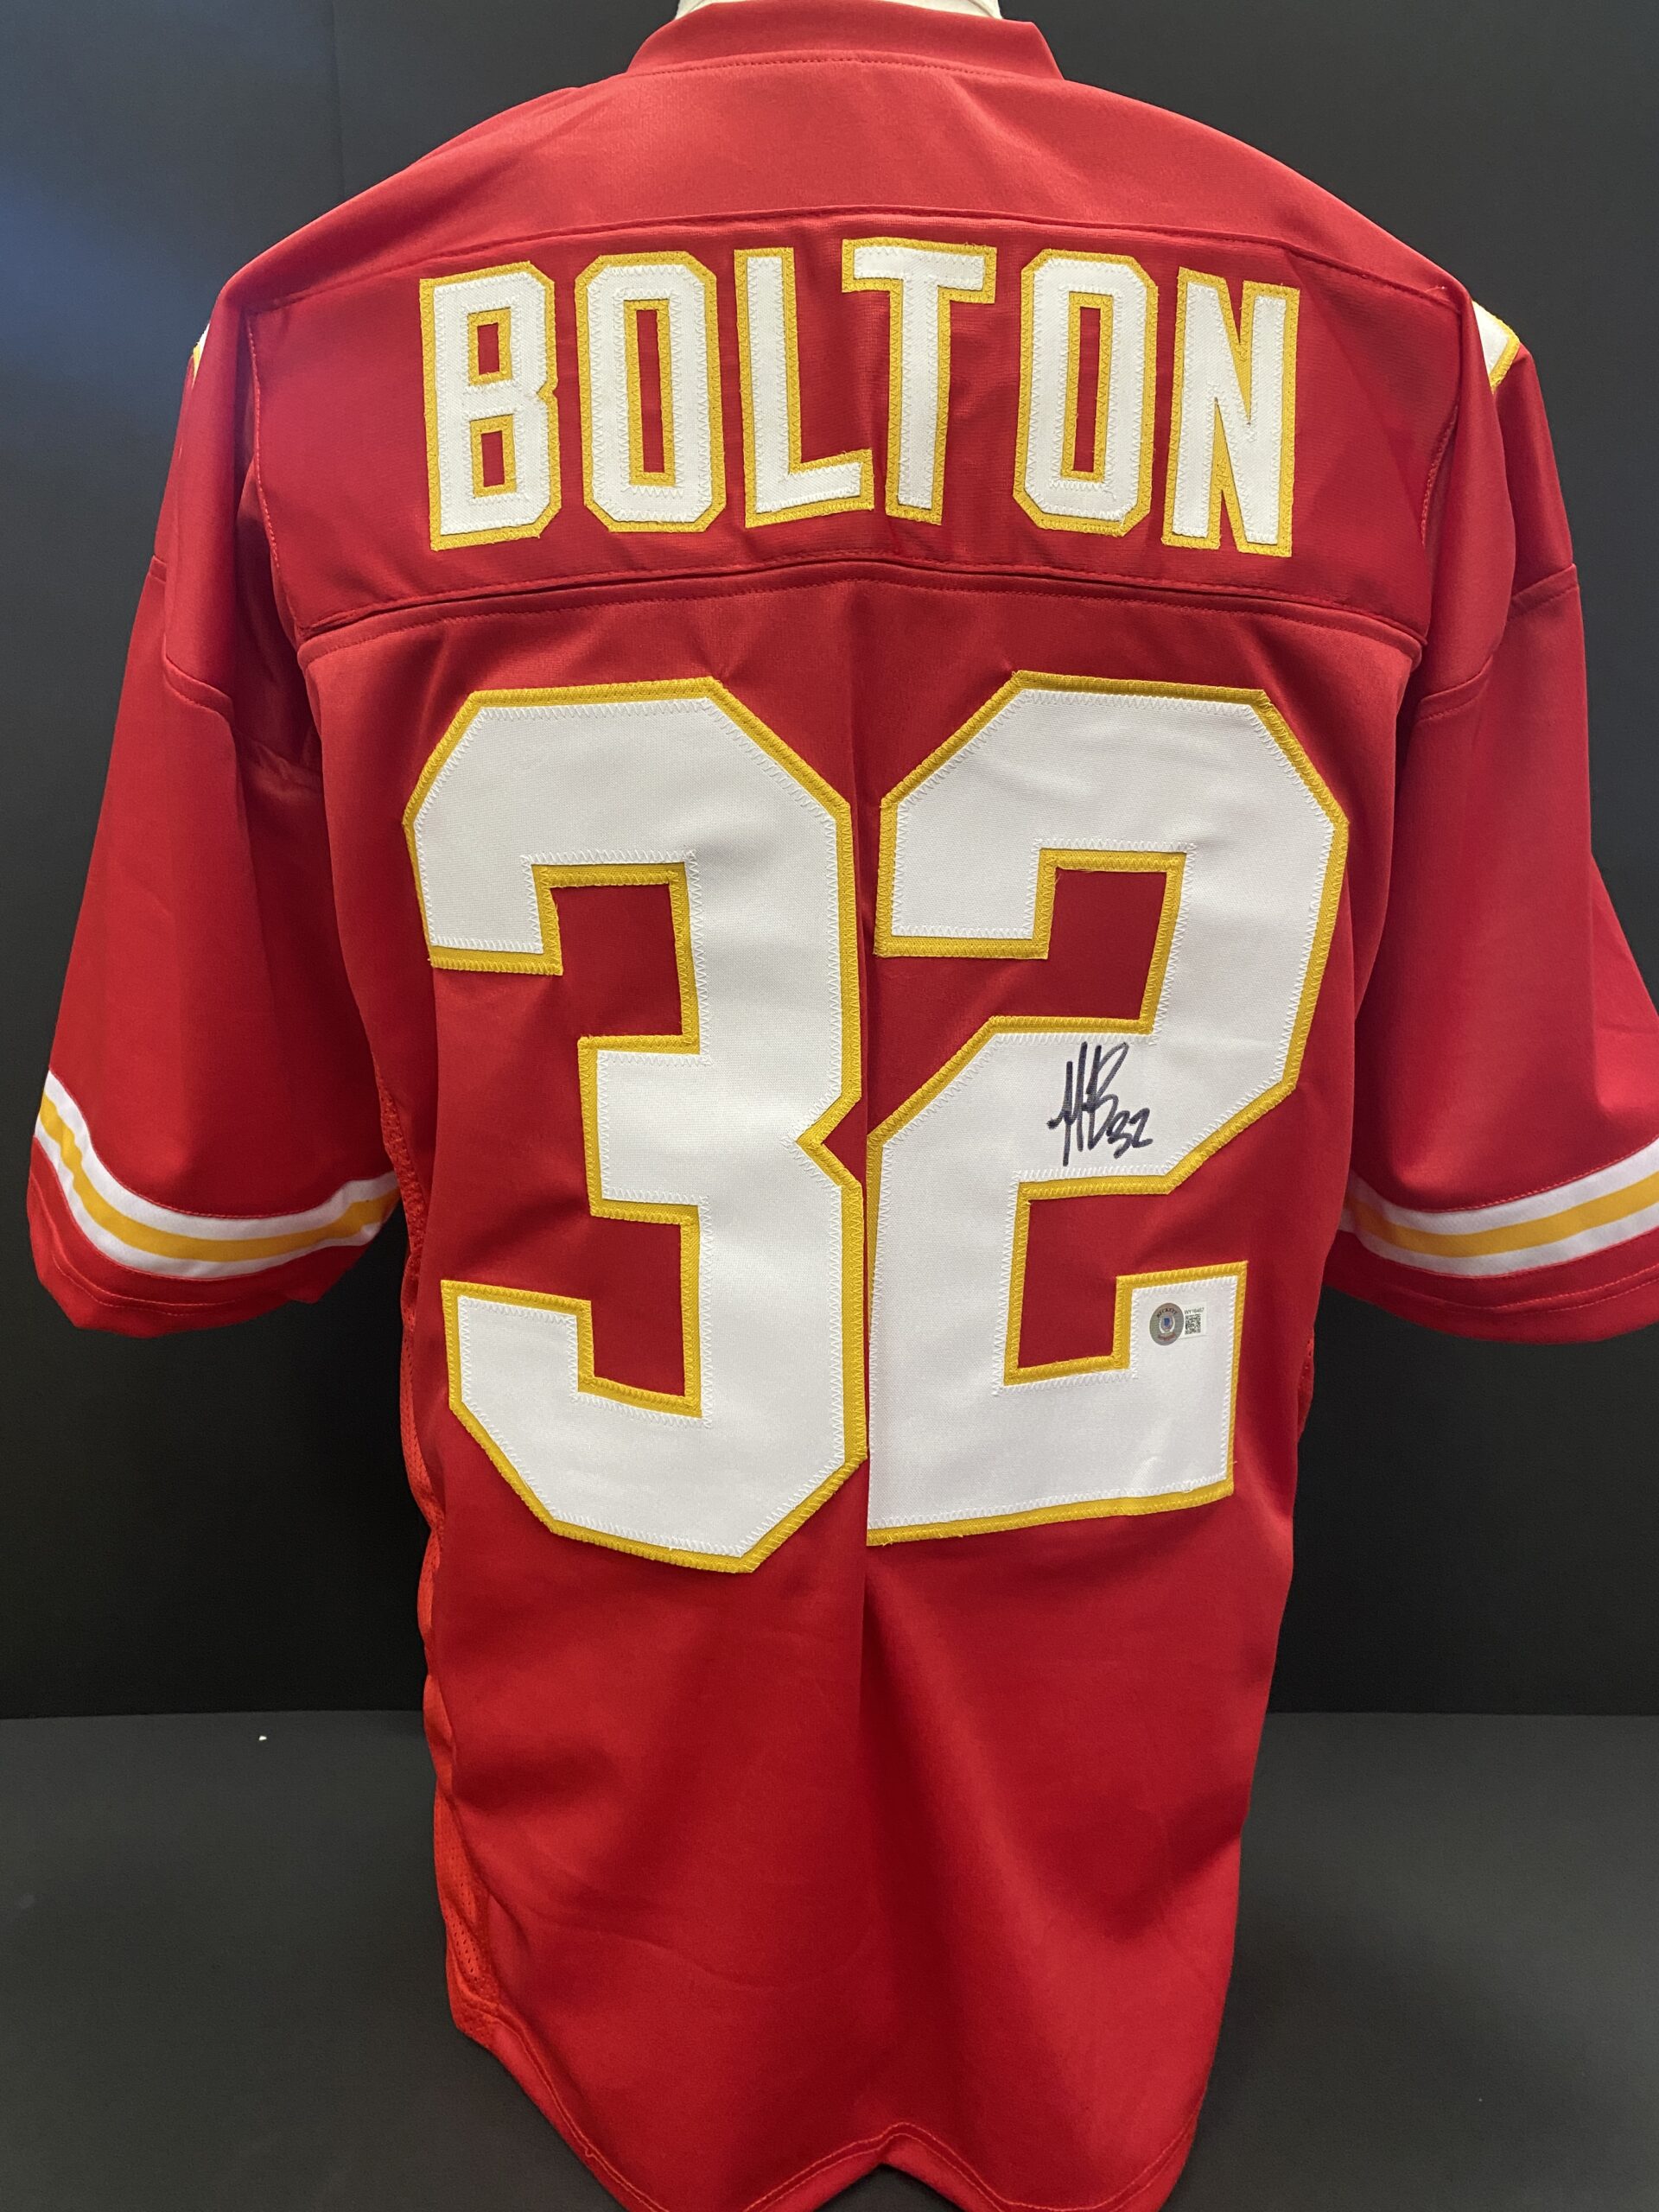 bolton chiefs jersey